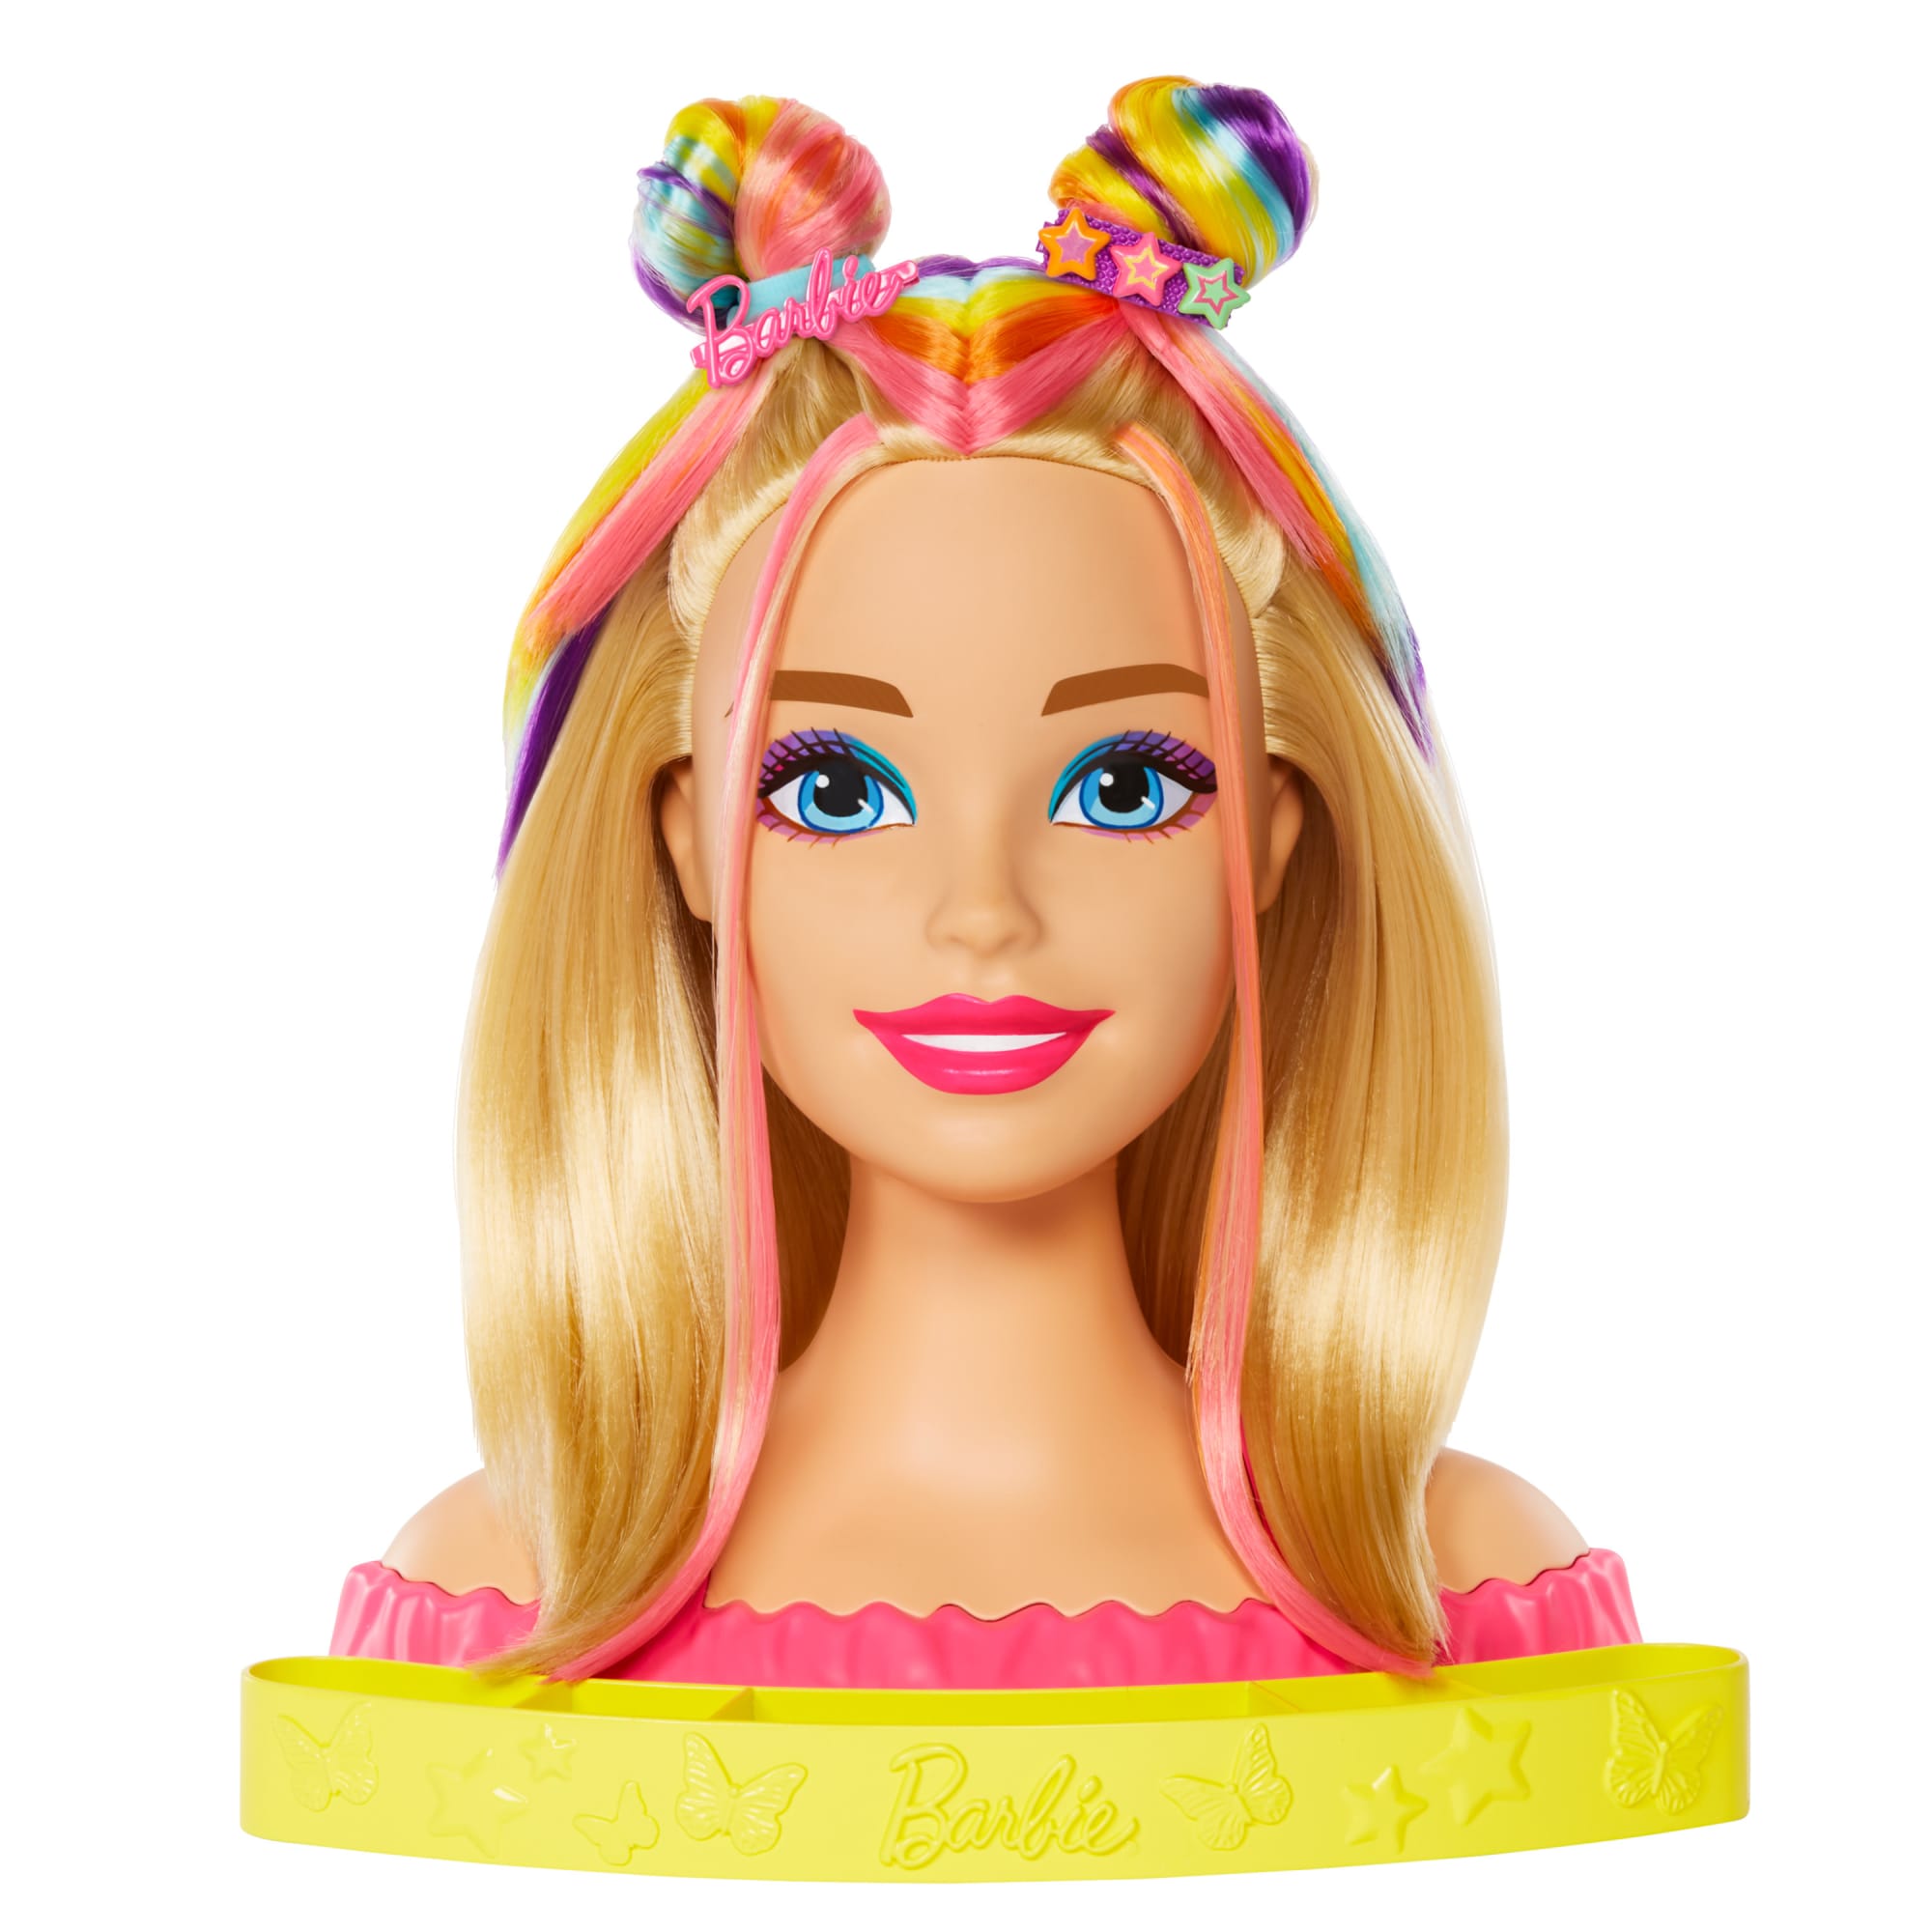 Barbie Deluxe Styling Head Blonde